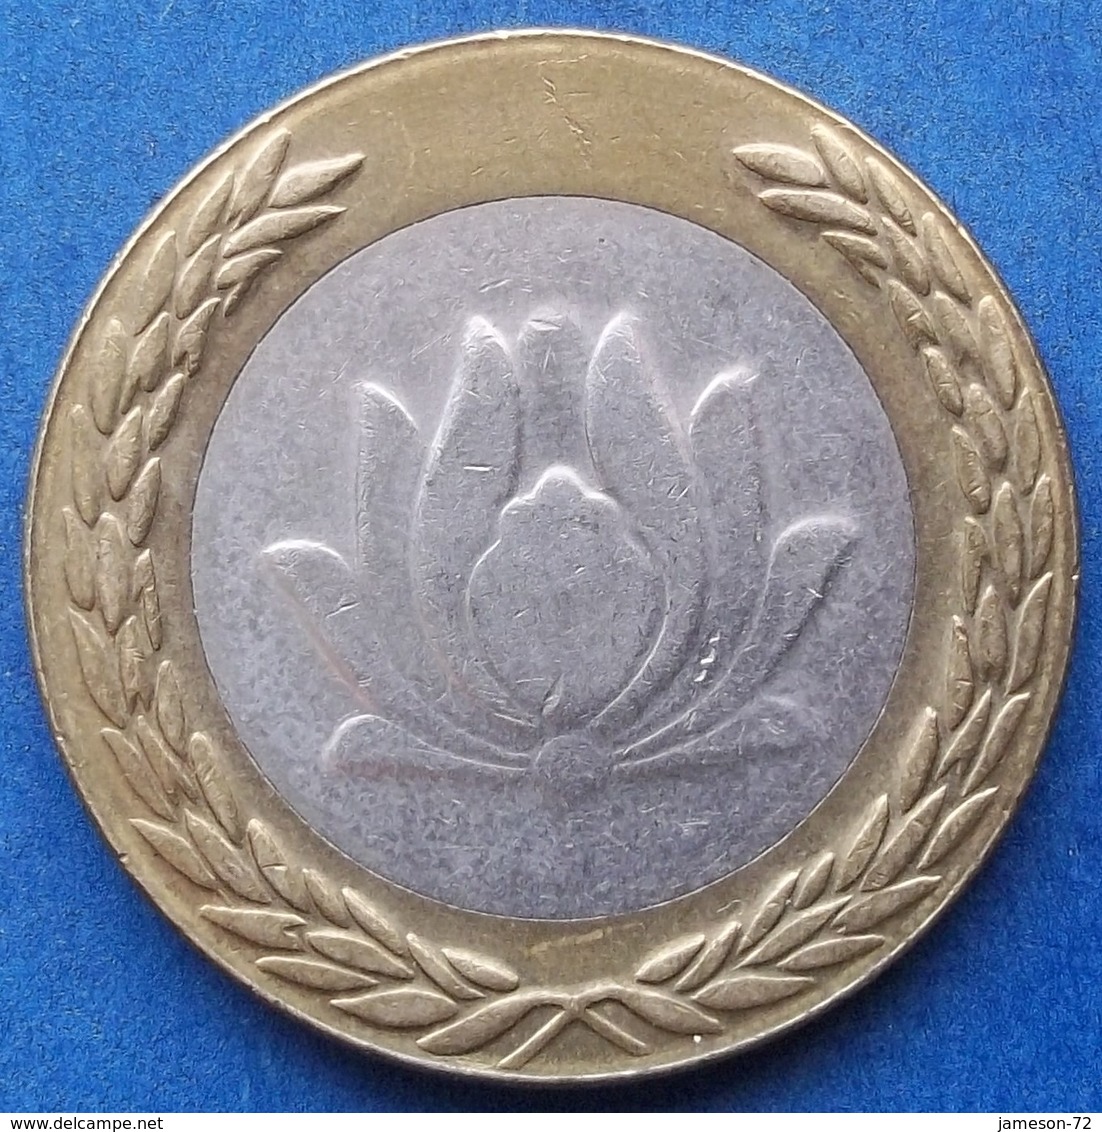 IRAN - 250 Rials SH1378 (1999AD) KM# 1262 Islamic Republic Since 1979 Bi-metallic - Edelweiss Coins - Iran